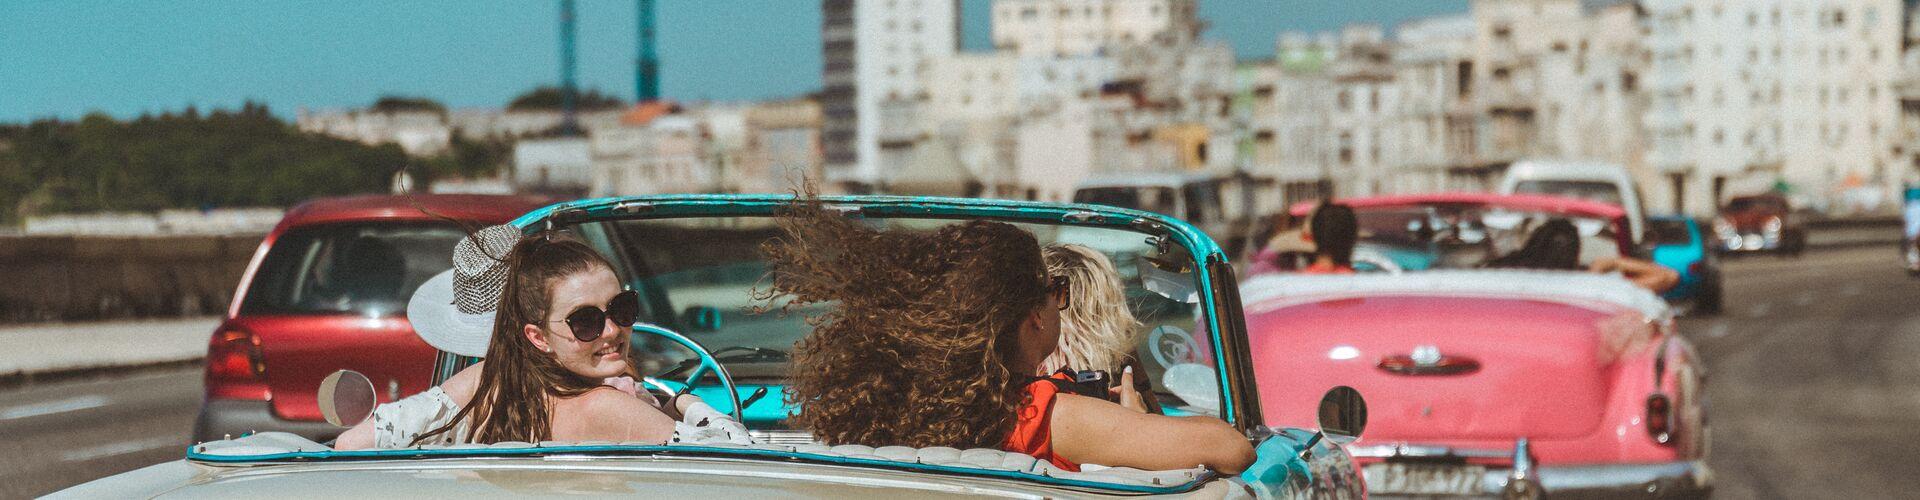 Four women in a convertible car in Havana